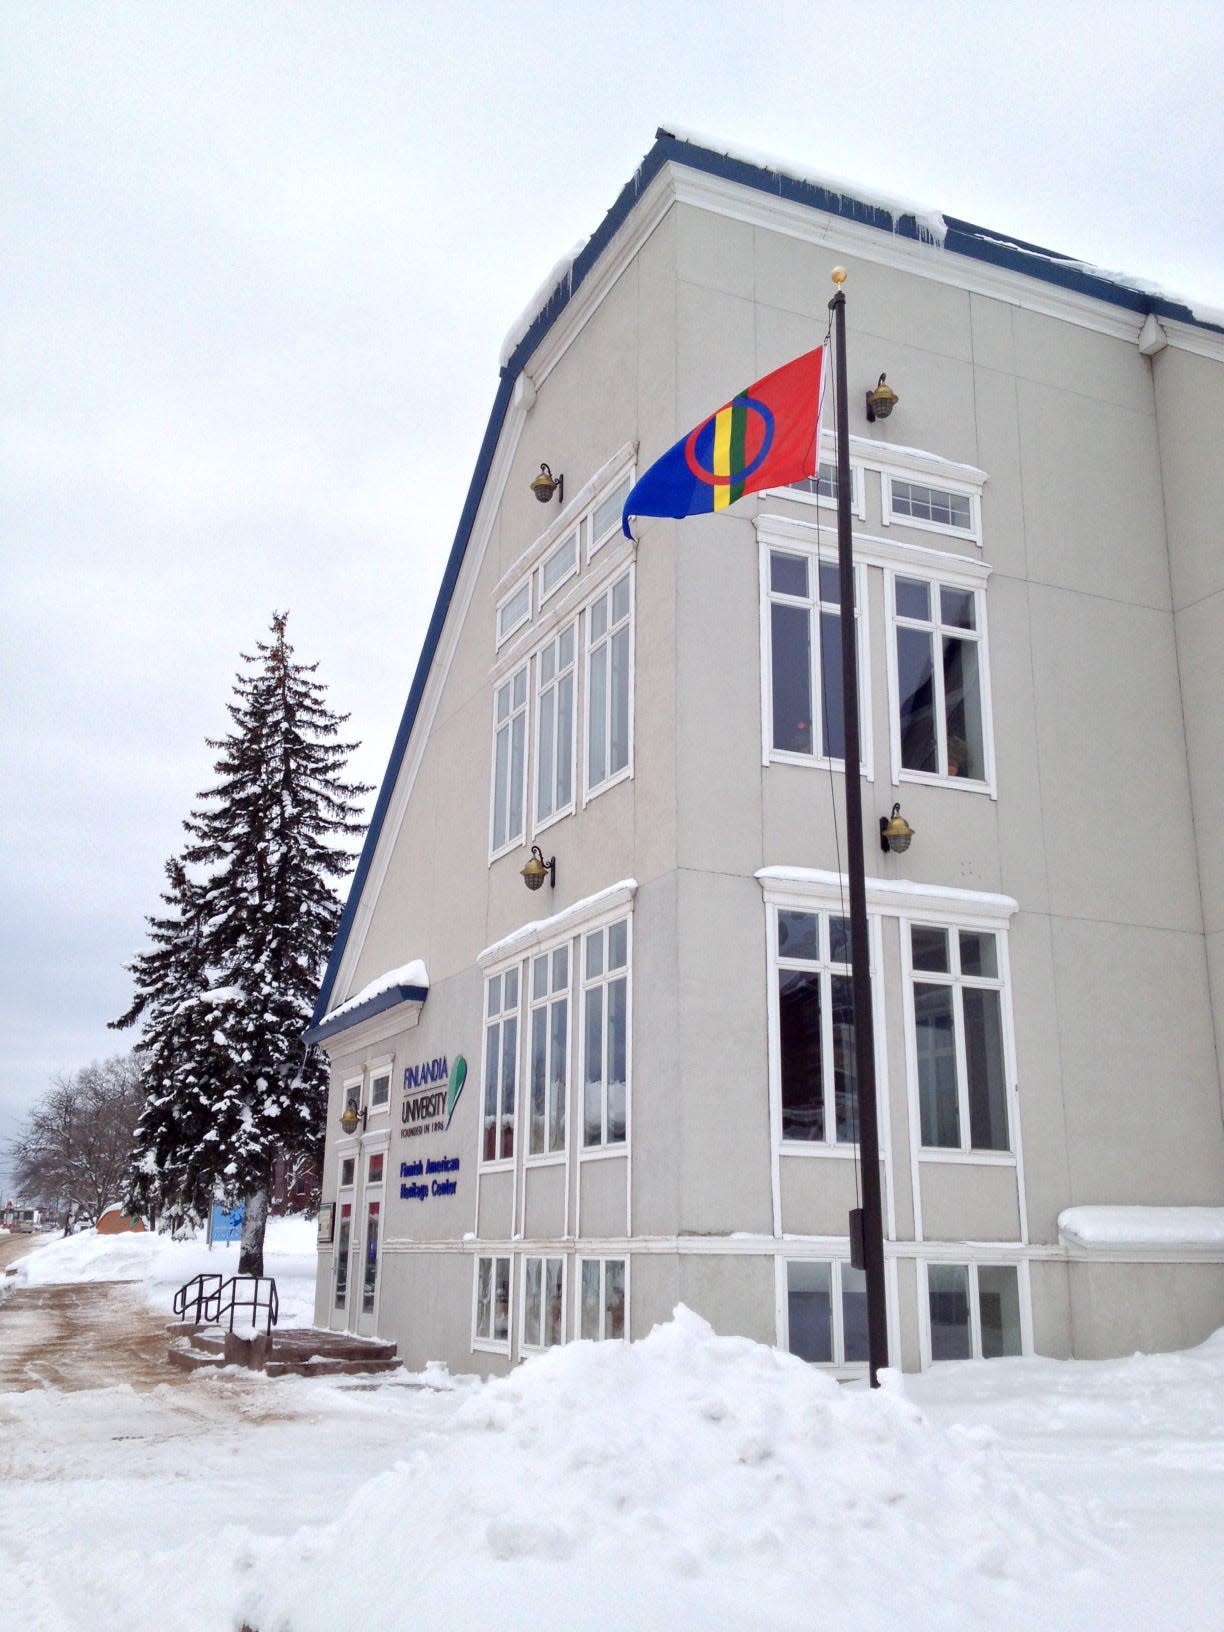 A Sámi flag flies outside Finlandia University in Hancock, in celebration of Sámi National Day.